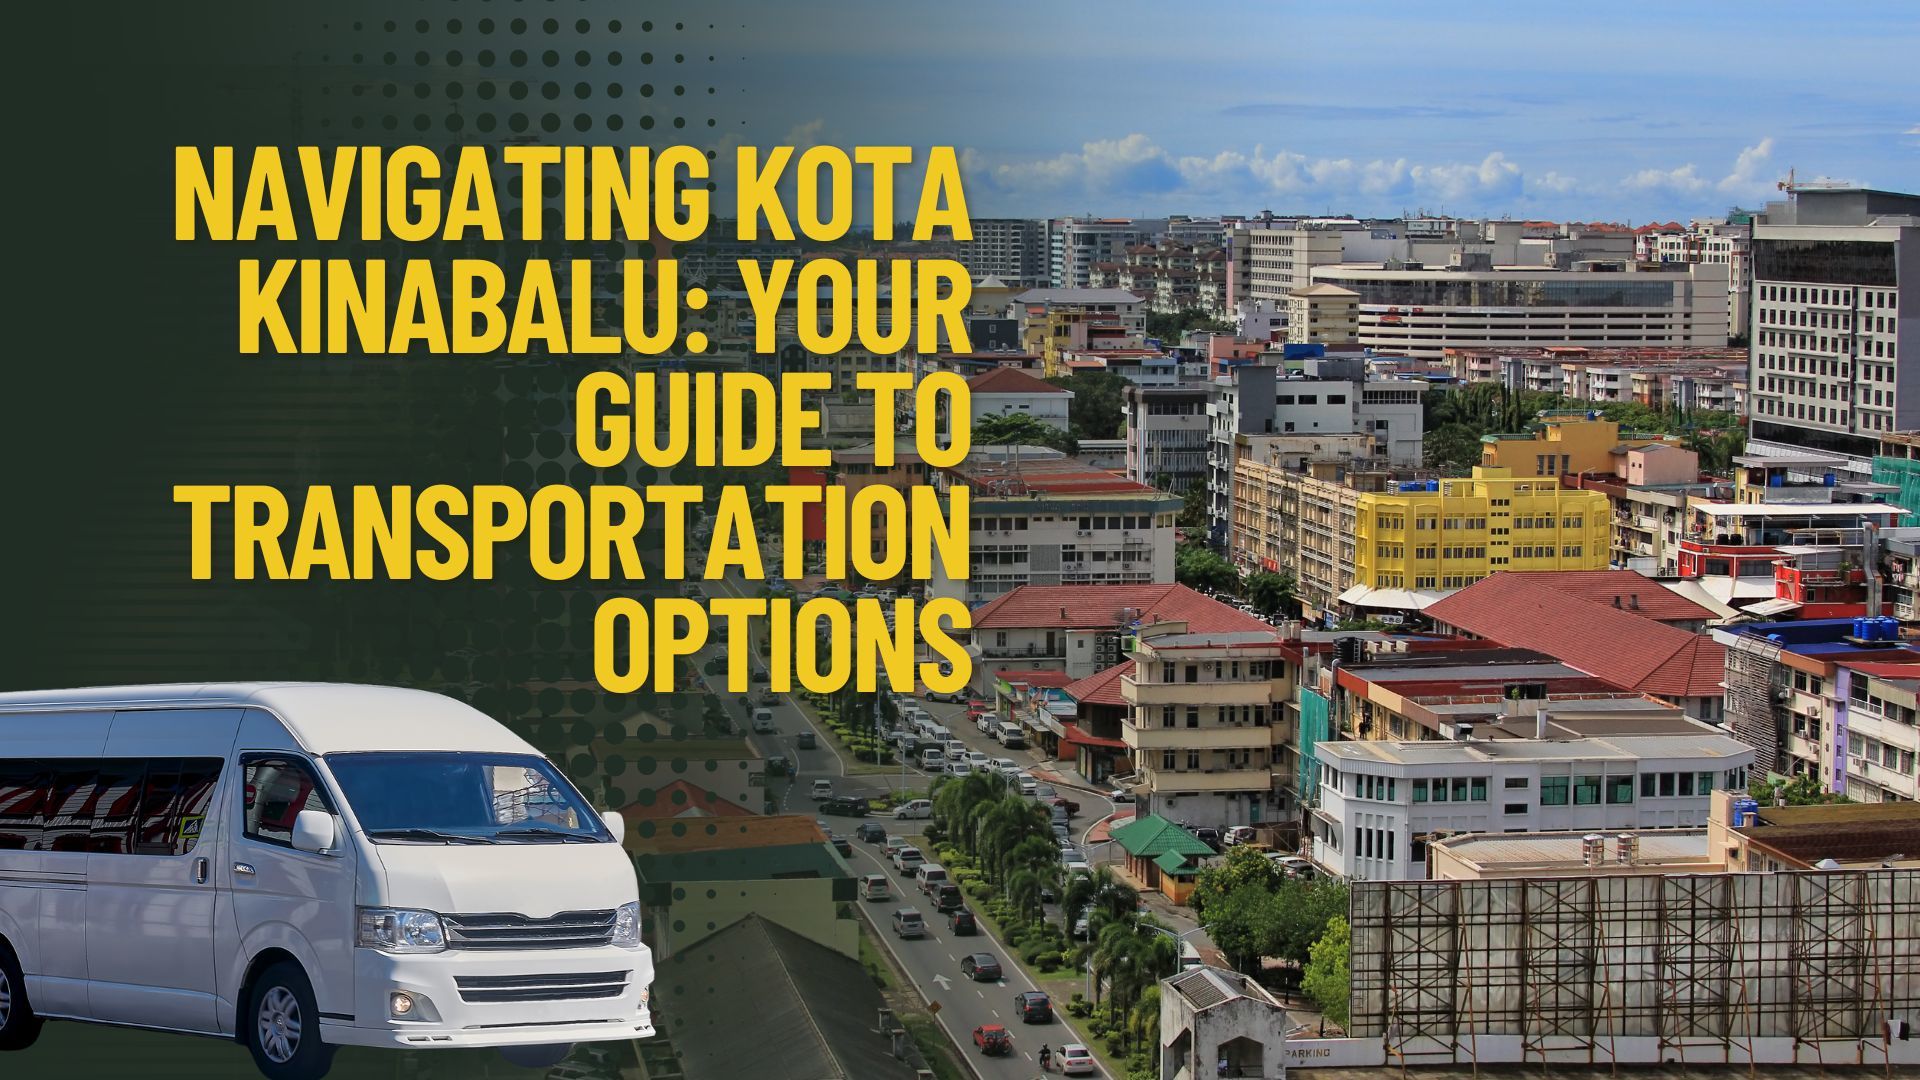 Image of Navigating Kota Kinabalu: Your Guide to Transportation Options